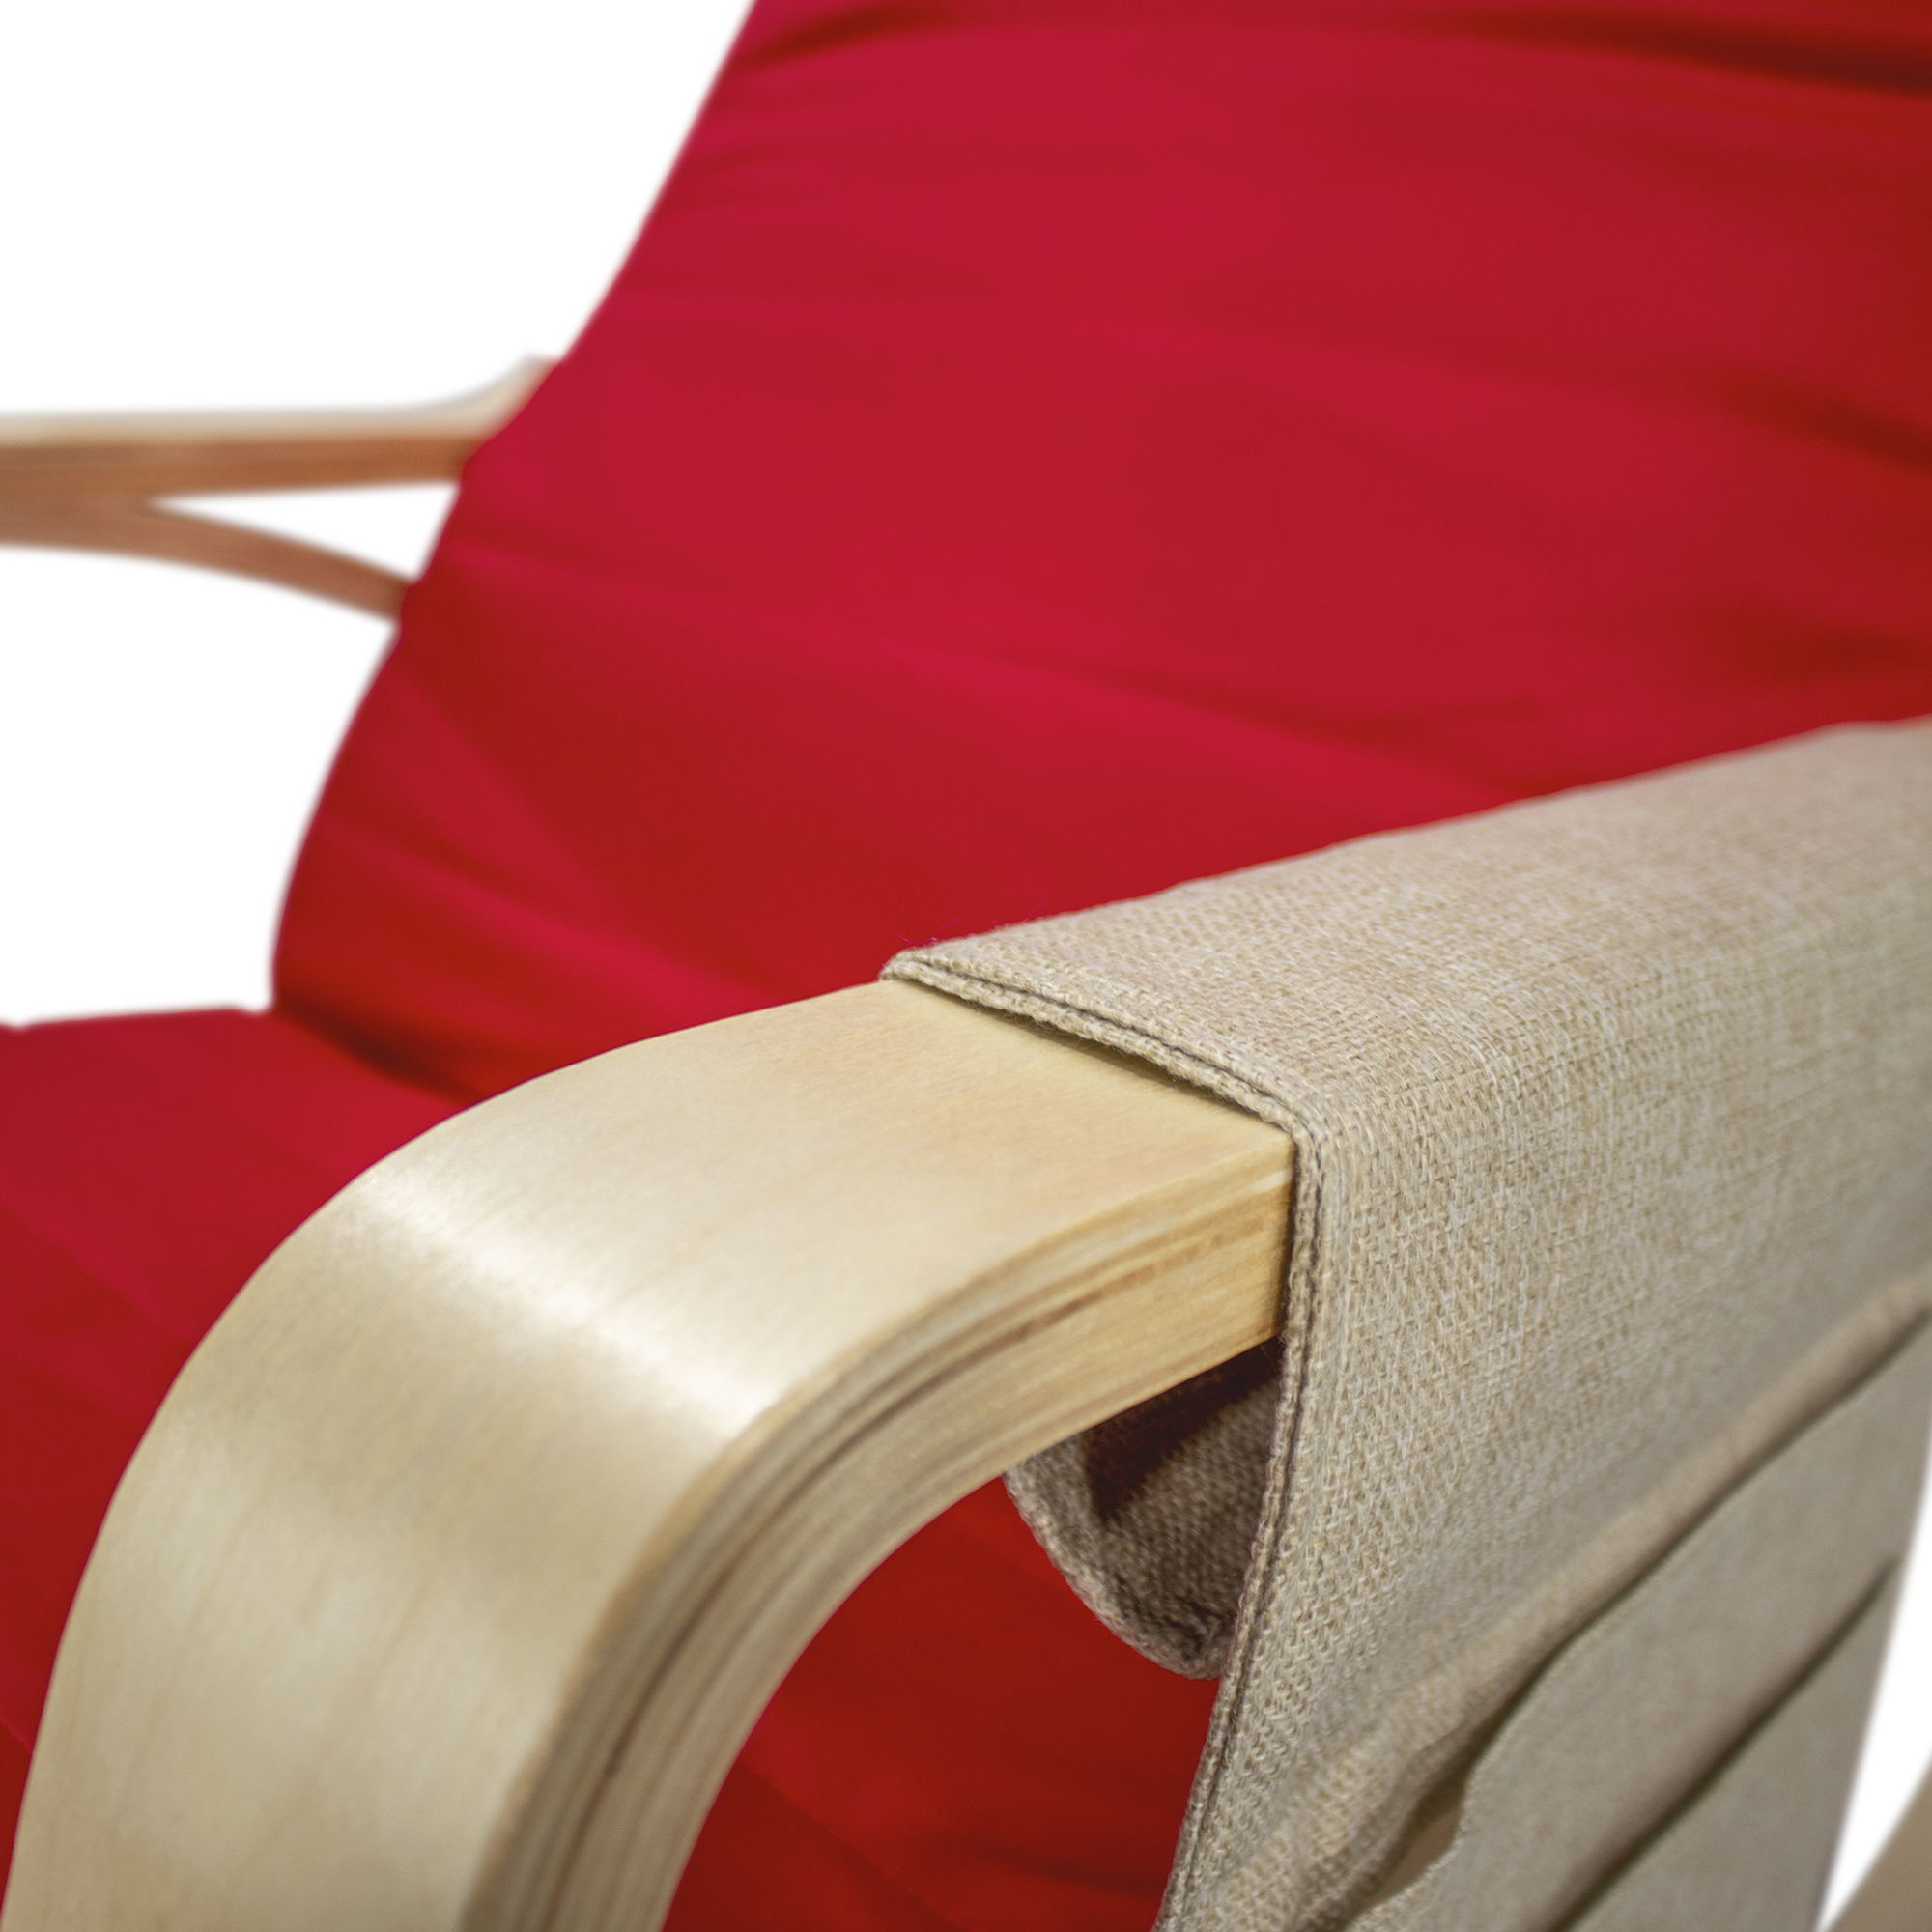 Relaxstuhl Schwingstuhl mit verstellbarem Fussteil D4 Rot